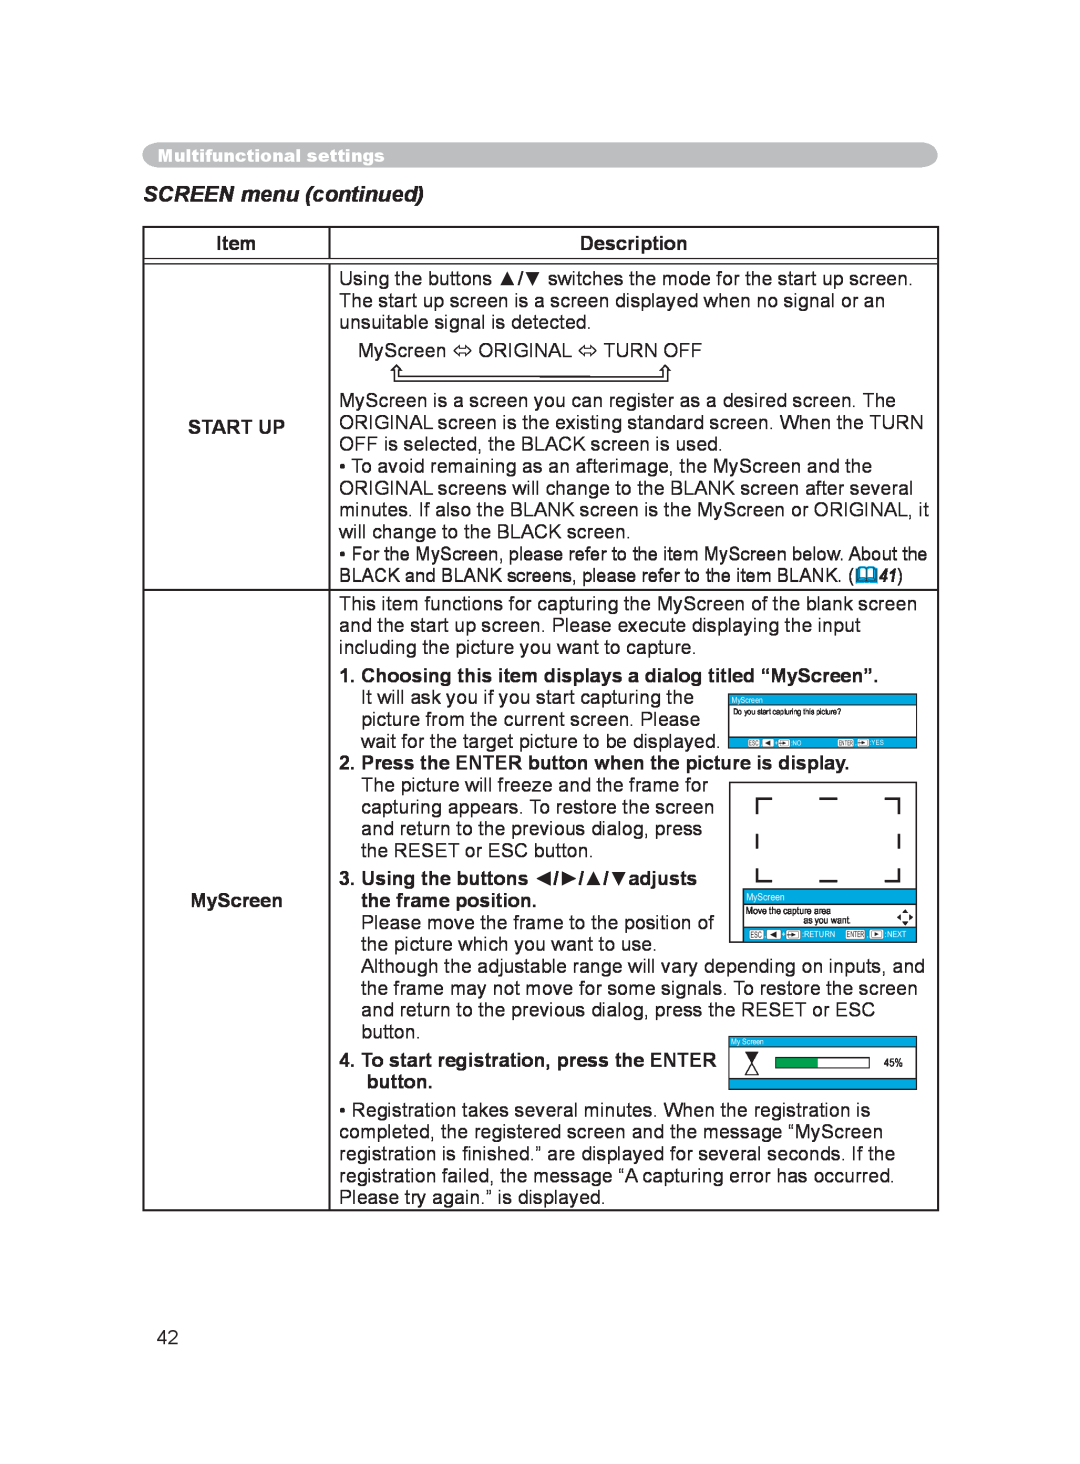 Hitachi PJ-LC9 user manual SCREEN menu continued 